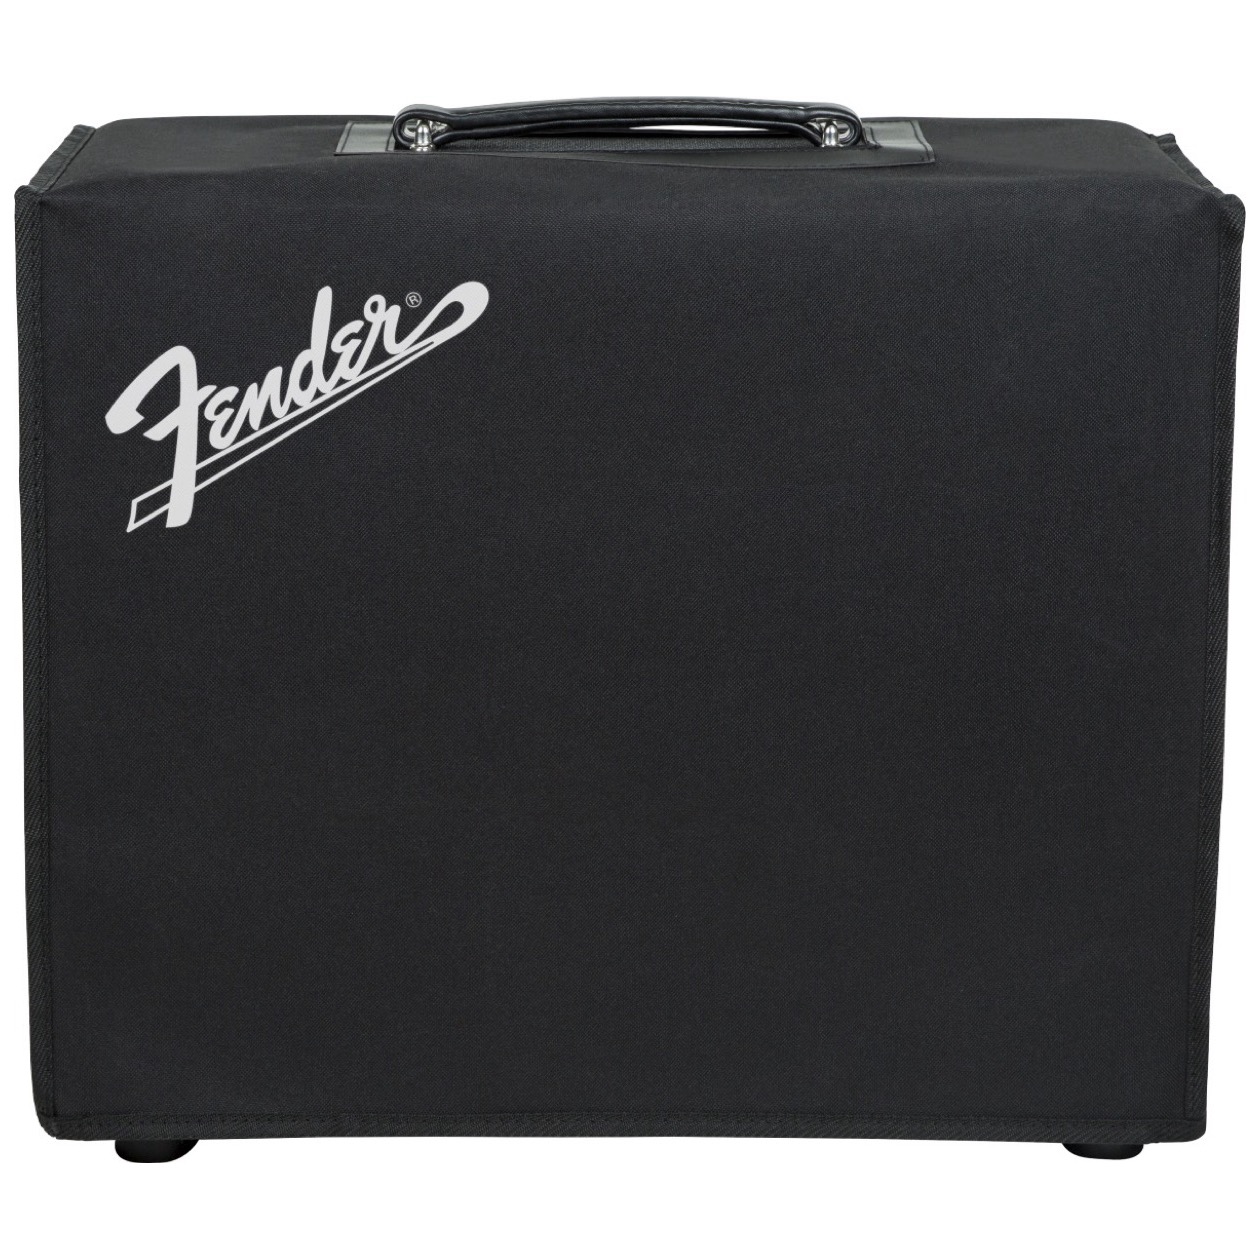 Fender FR 10 Amp Cover, Black, beschermhoes voor Tone Master FR 10 Powered Speaker